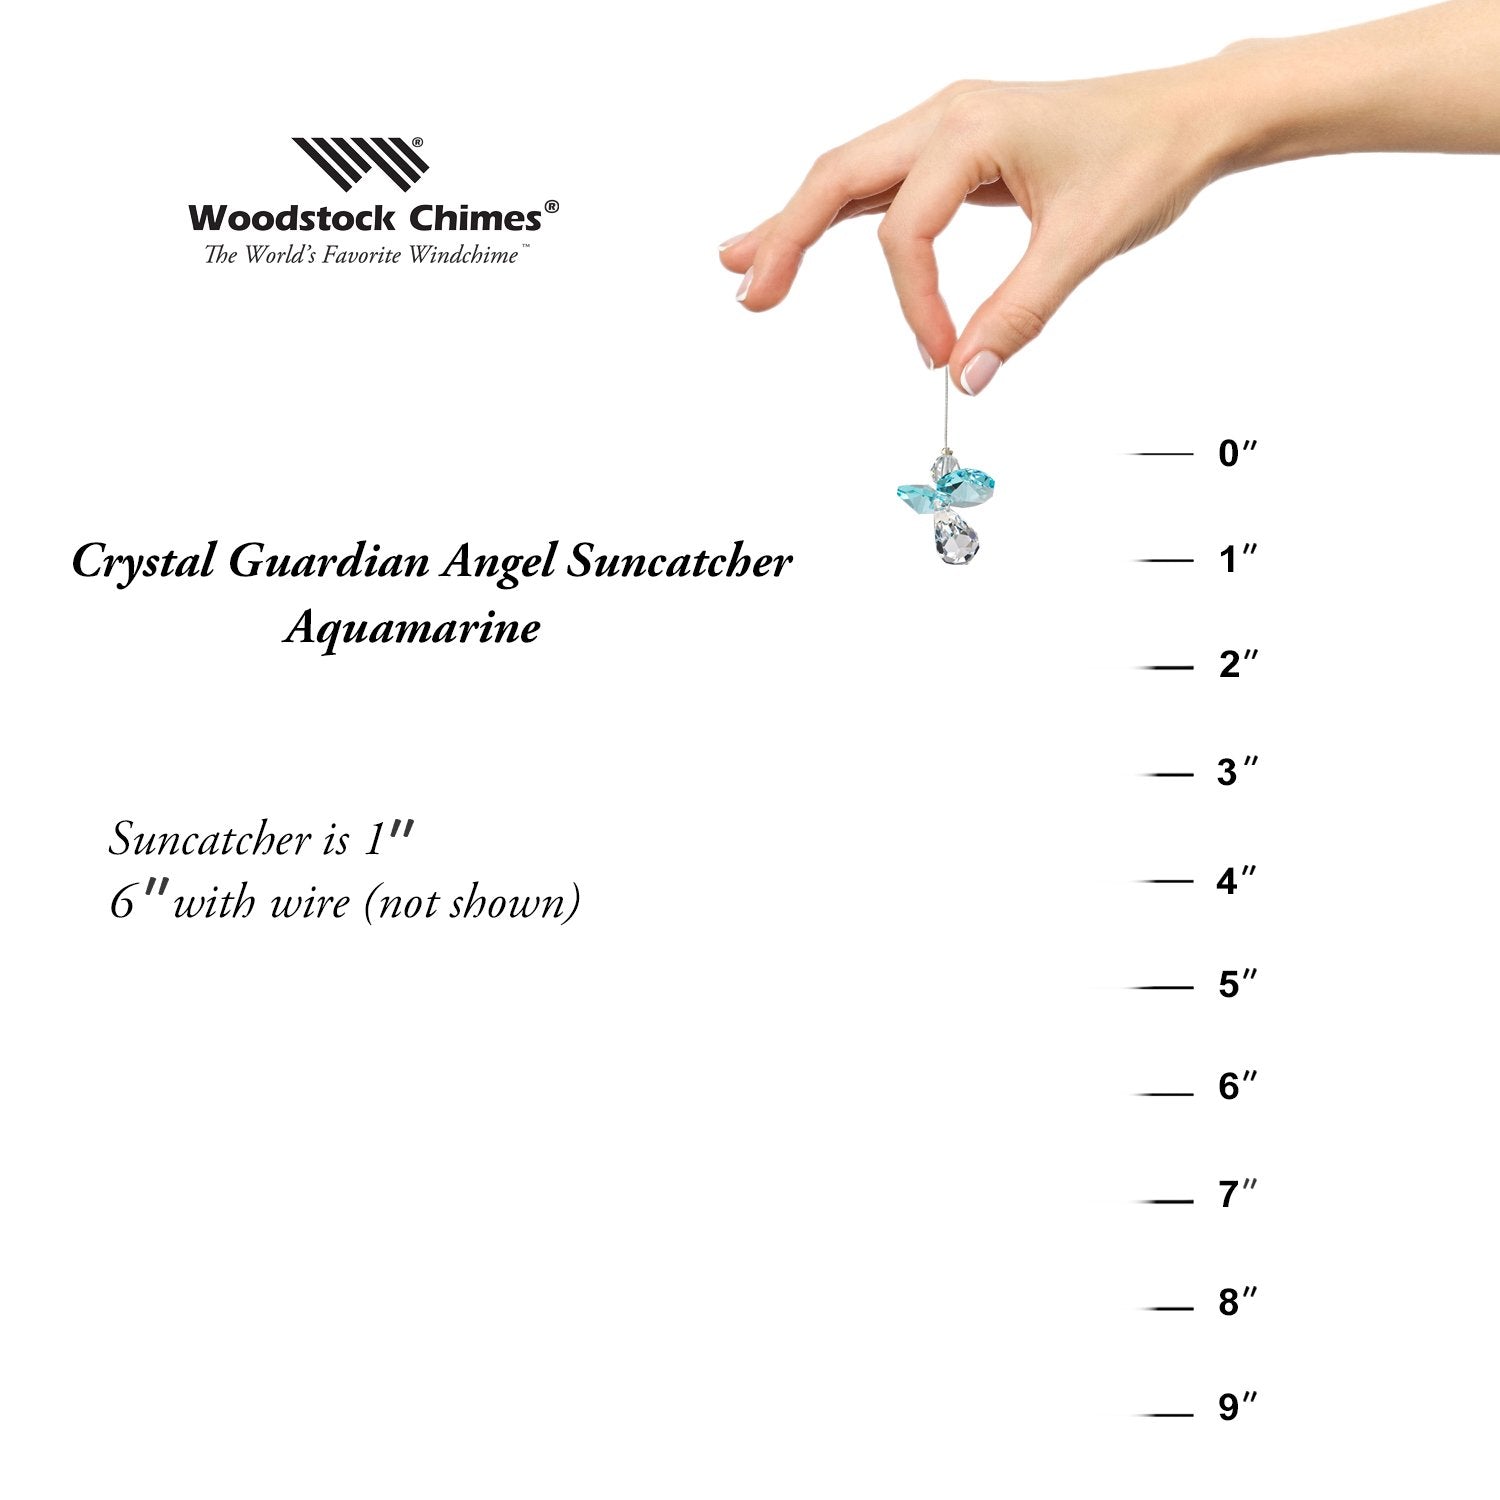 Crystal Guardian Angel Suncatcher - Aquamarine (March) proportion image